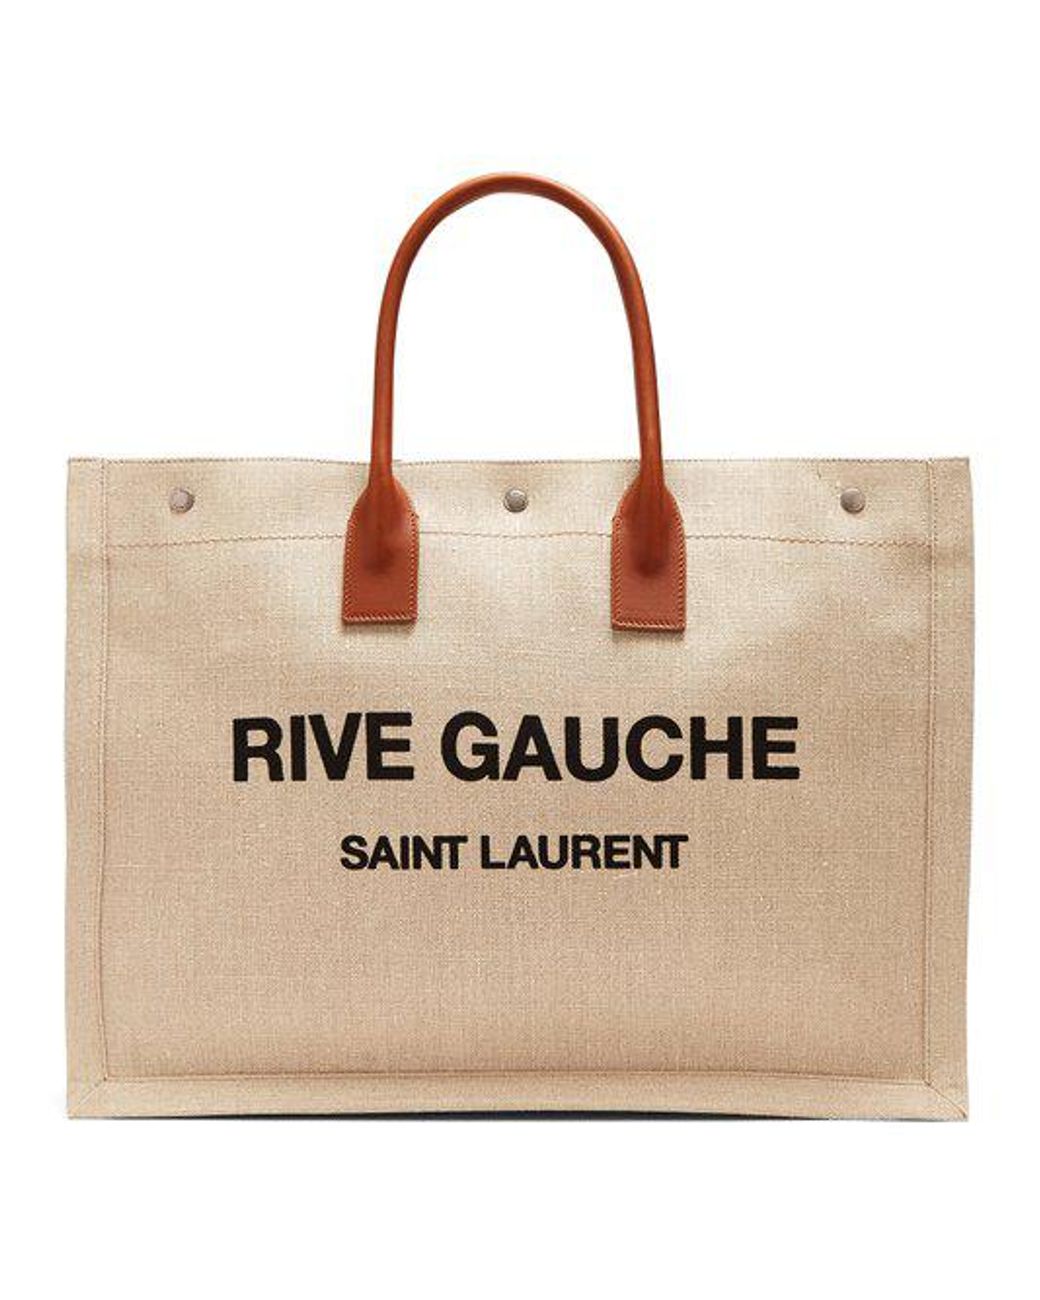 SAINT LAURENT Rive Gauche Linen-Canvas Tote in Brown